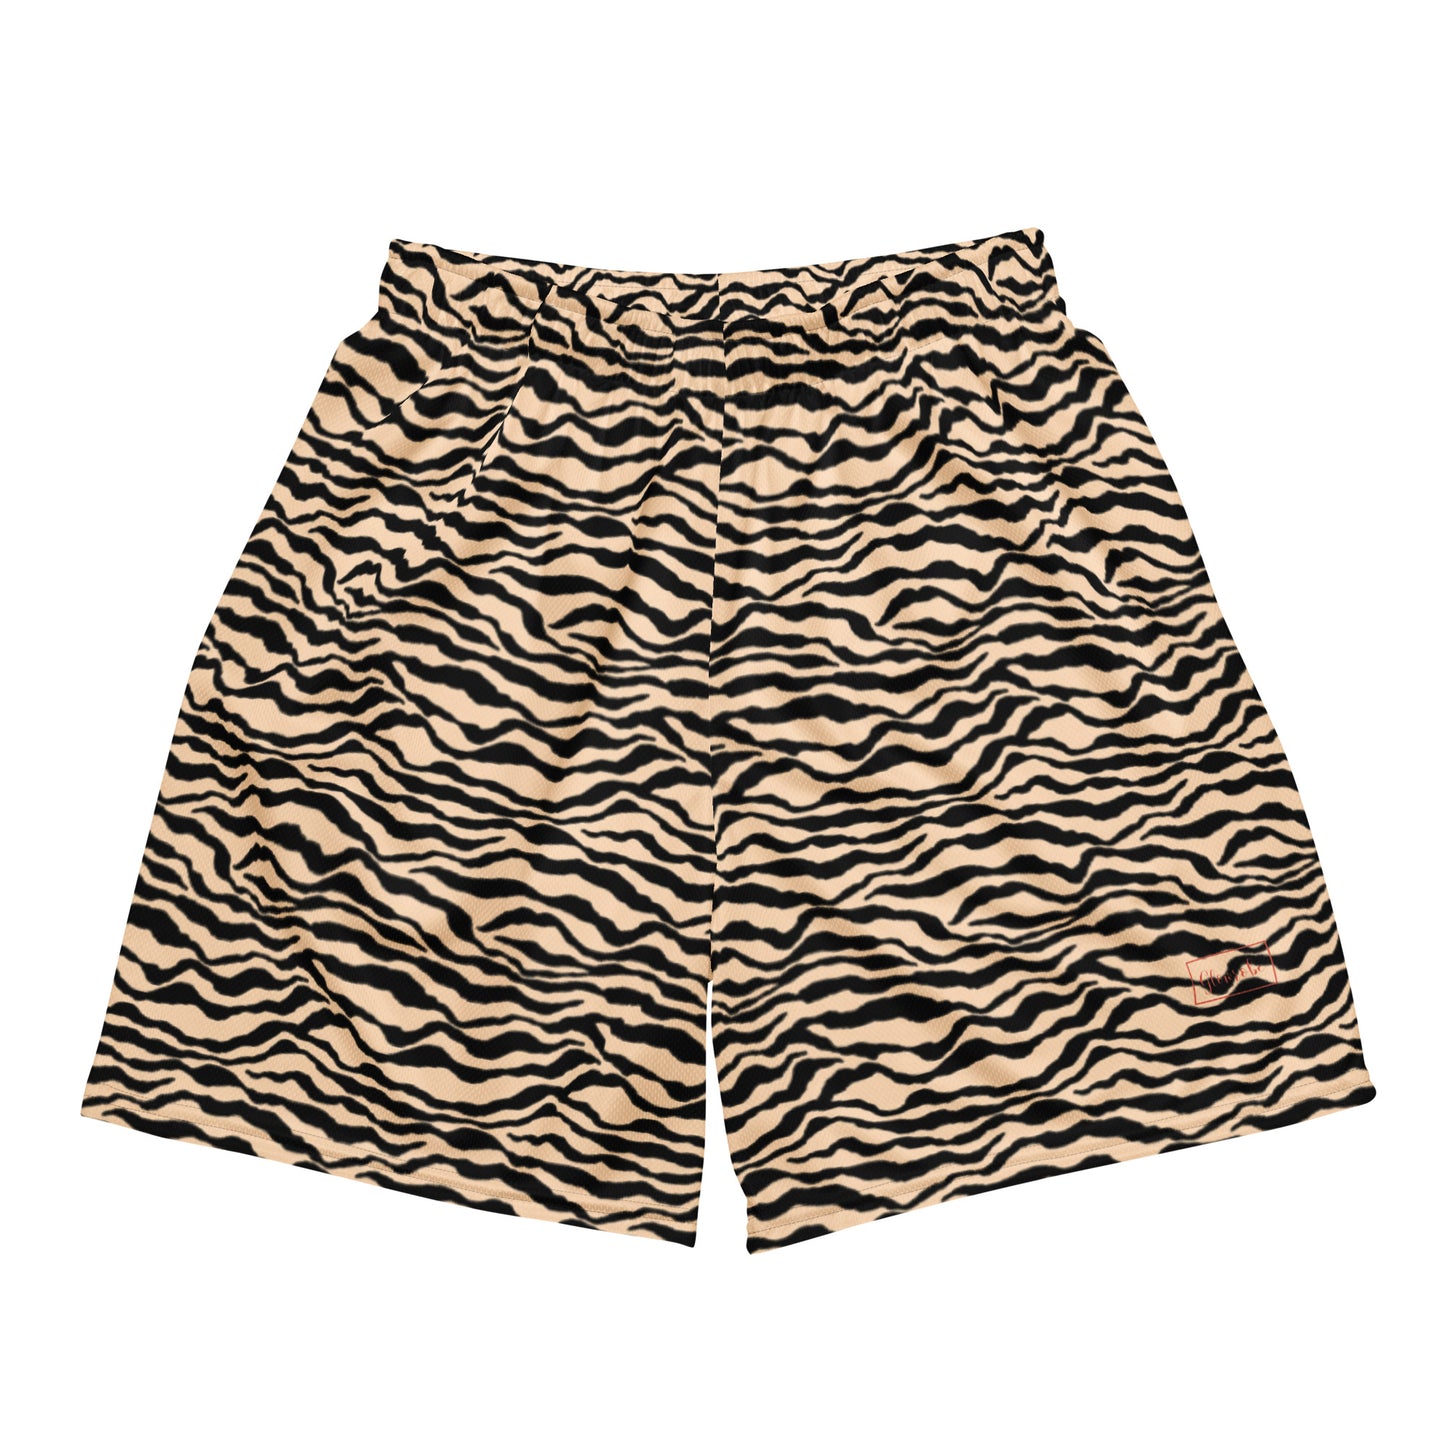 Panther Prowl Mesh Shorts